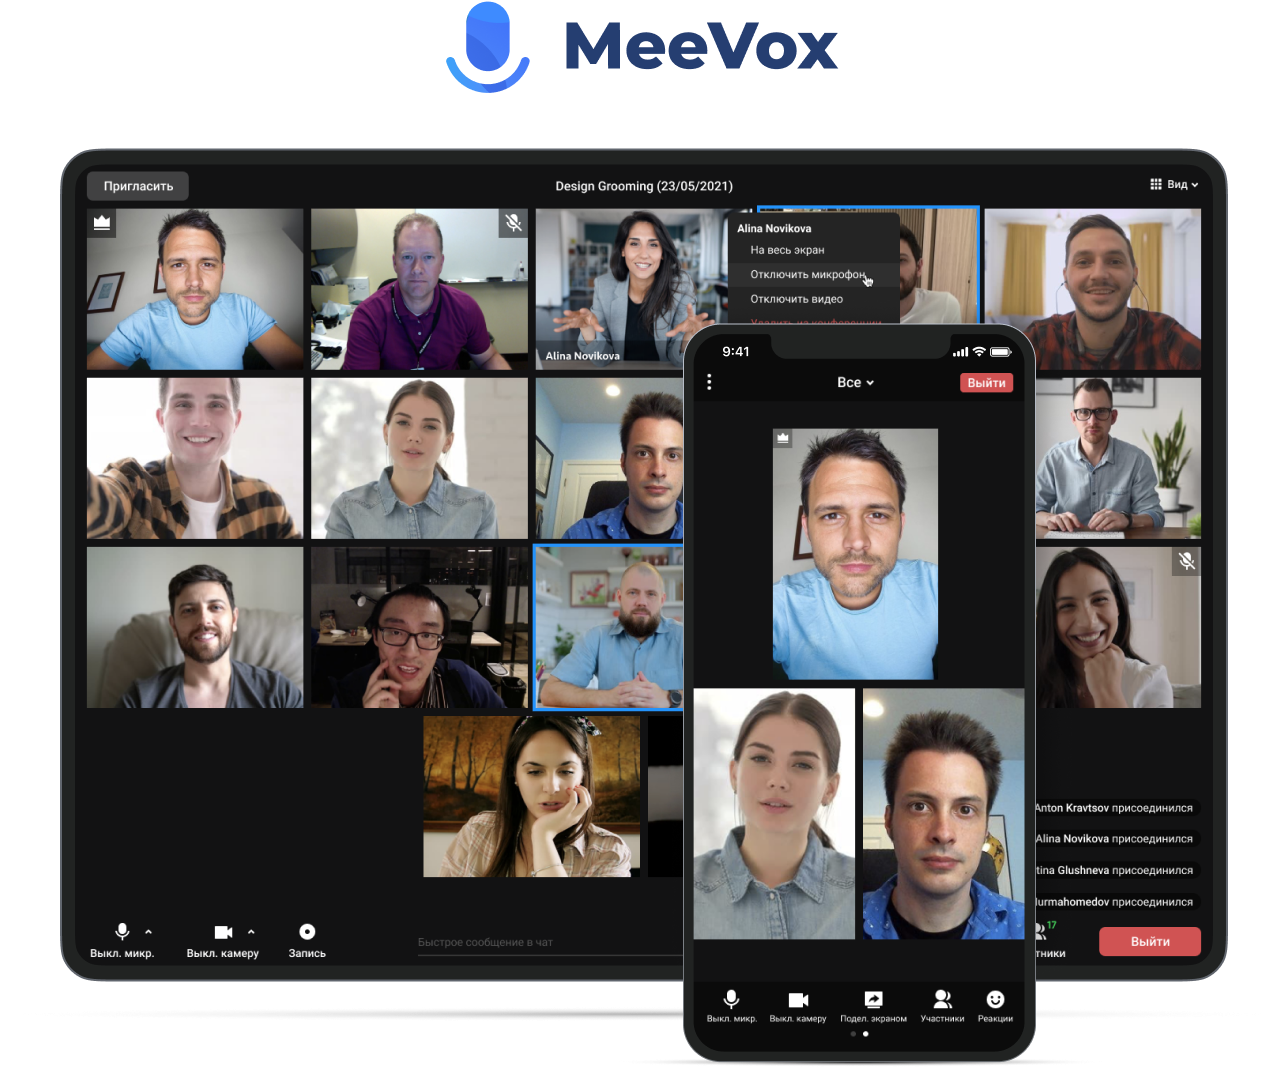 MeeVox. A corporate videoconferencing tool